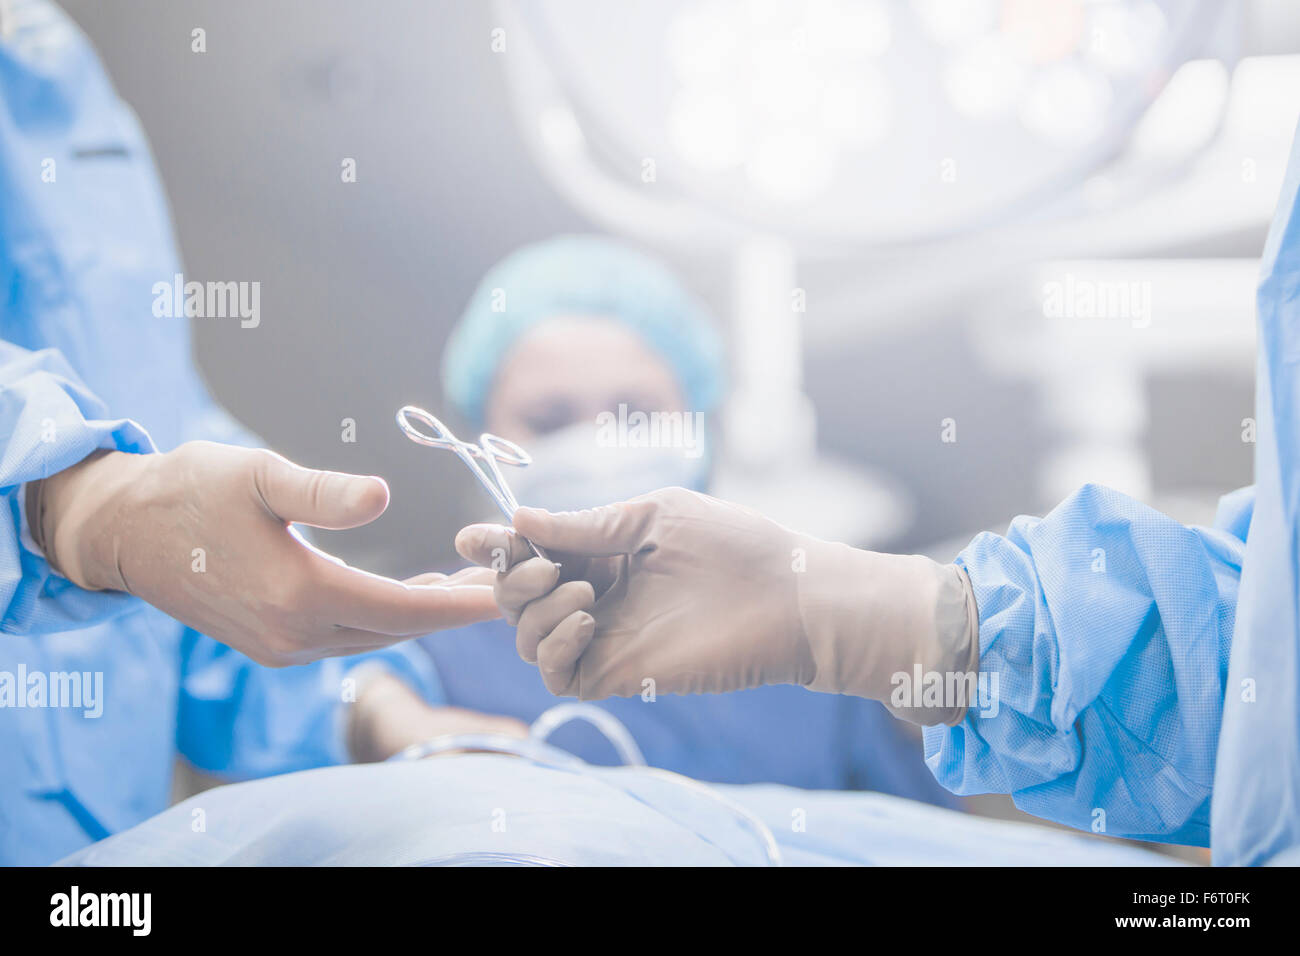 Surgeons handing forceps in operating room Stock Photo